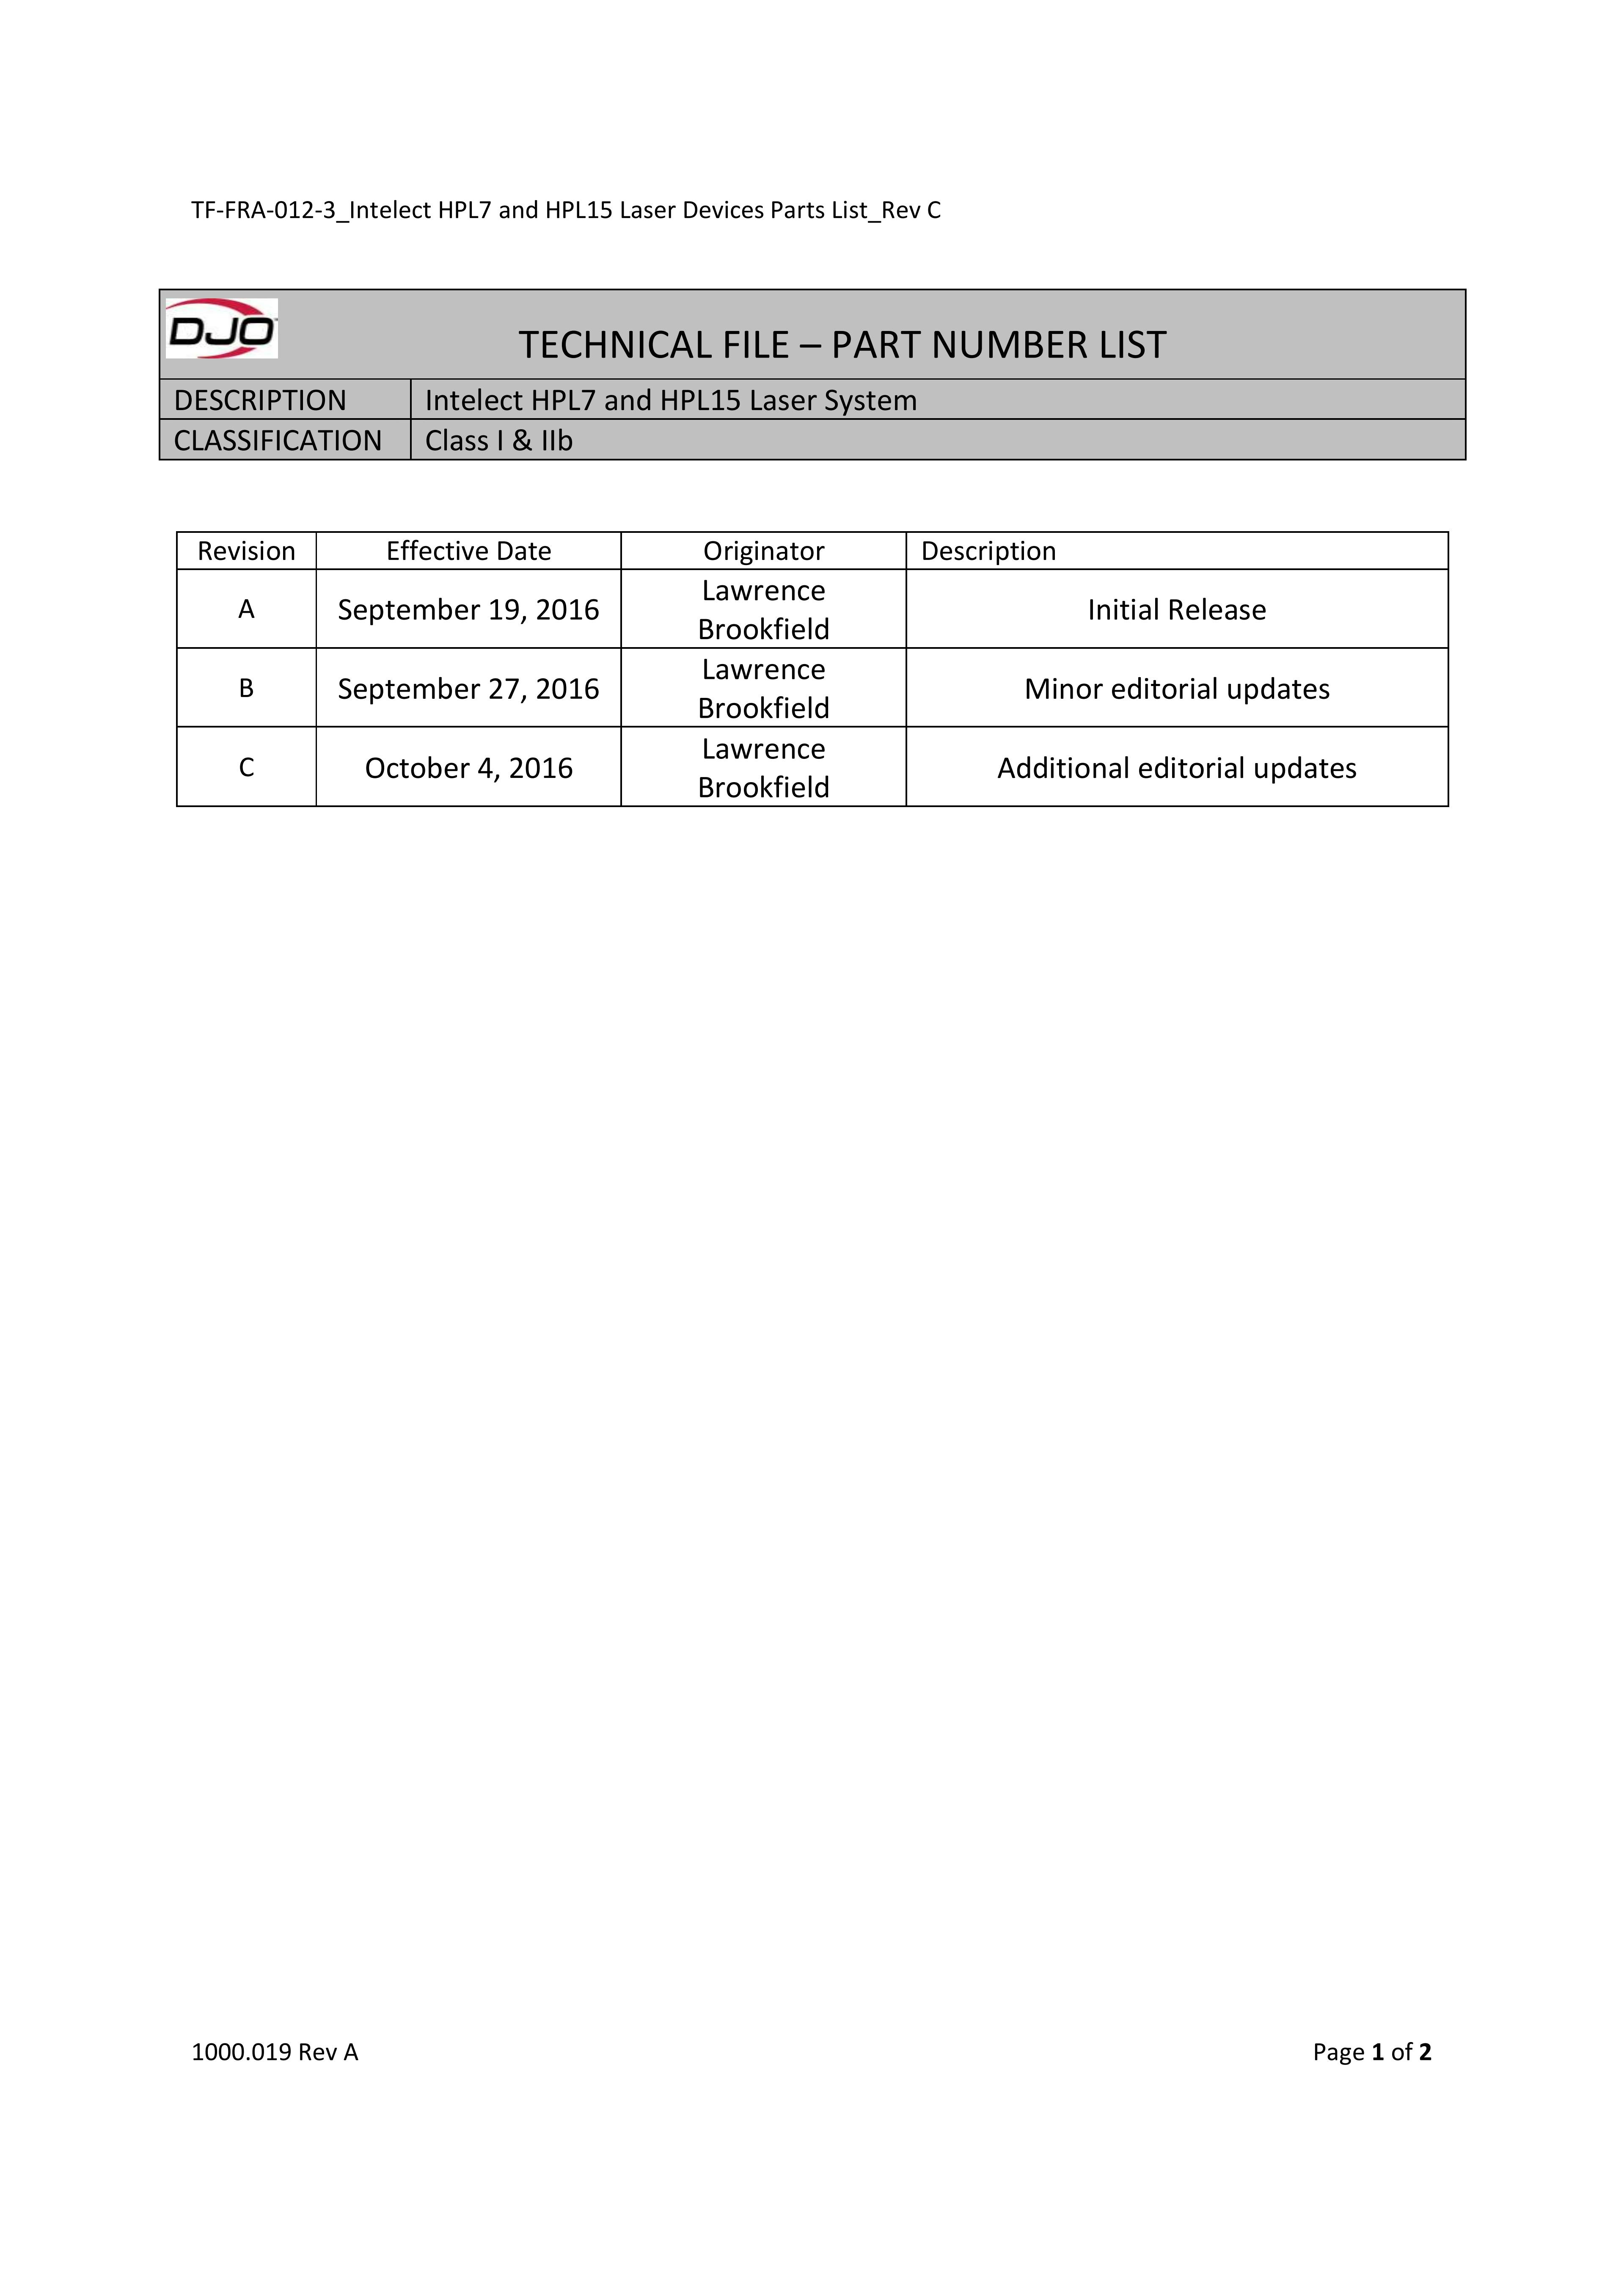 TF-FRA-012-3_Intelect HPL7 and HPL15 Laser Devices Parts List_Rev C.pdf